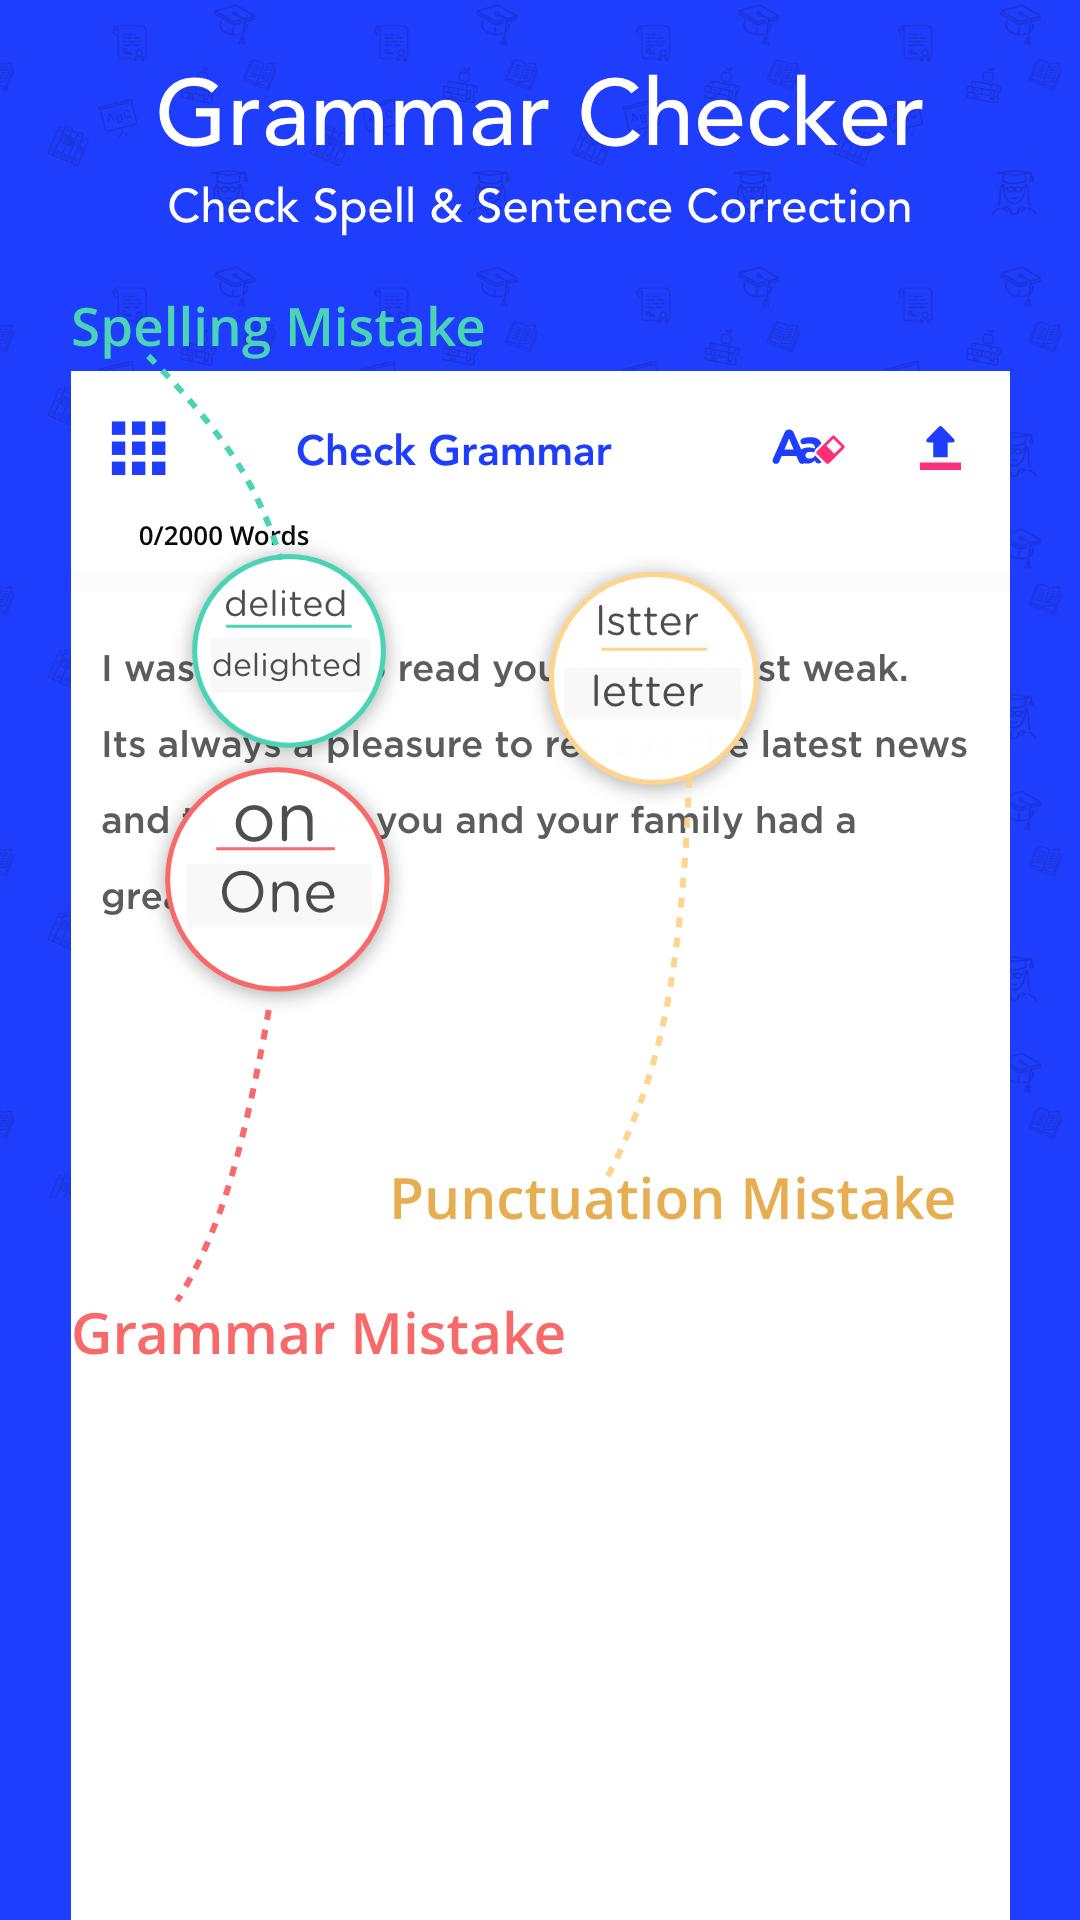 Check grammar